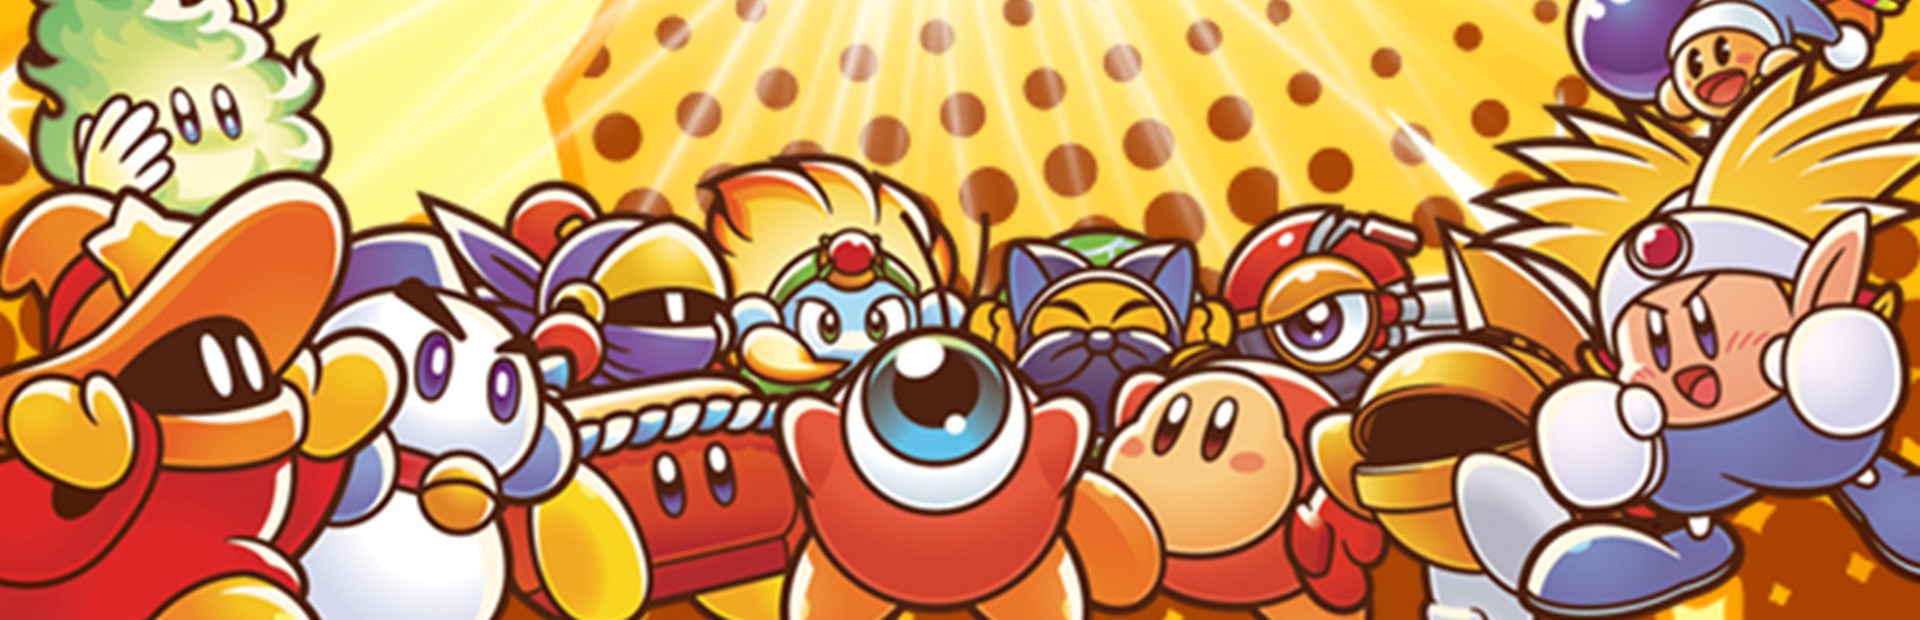 Kirby: Super Star Ultra - SteamGridDB